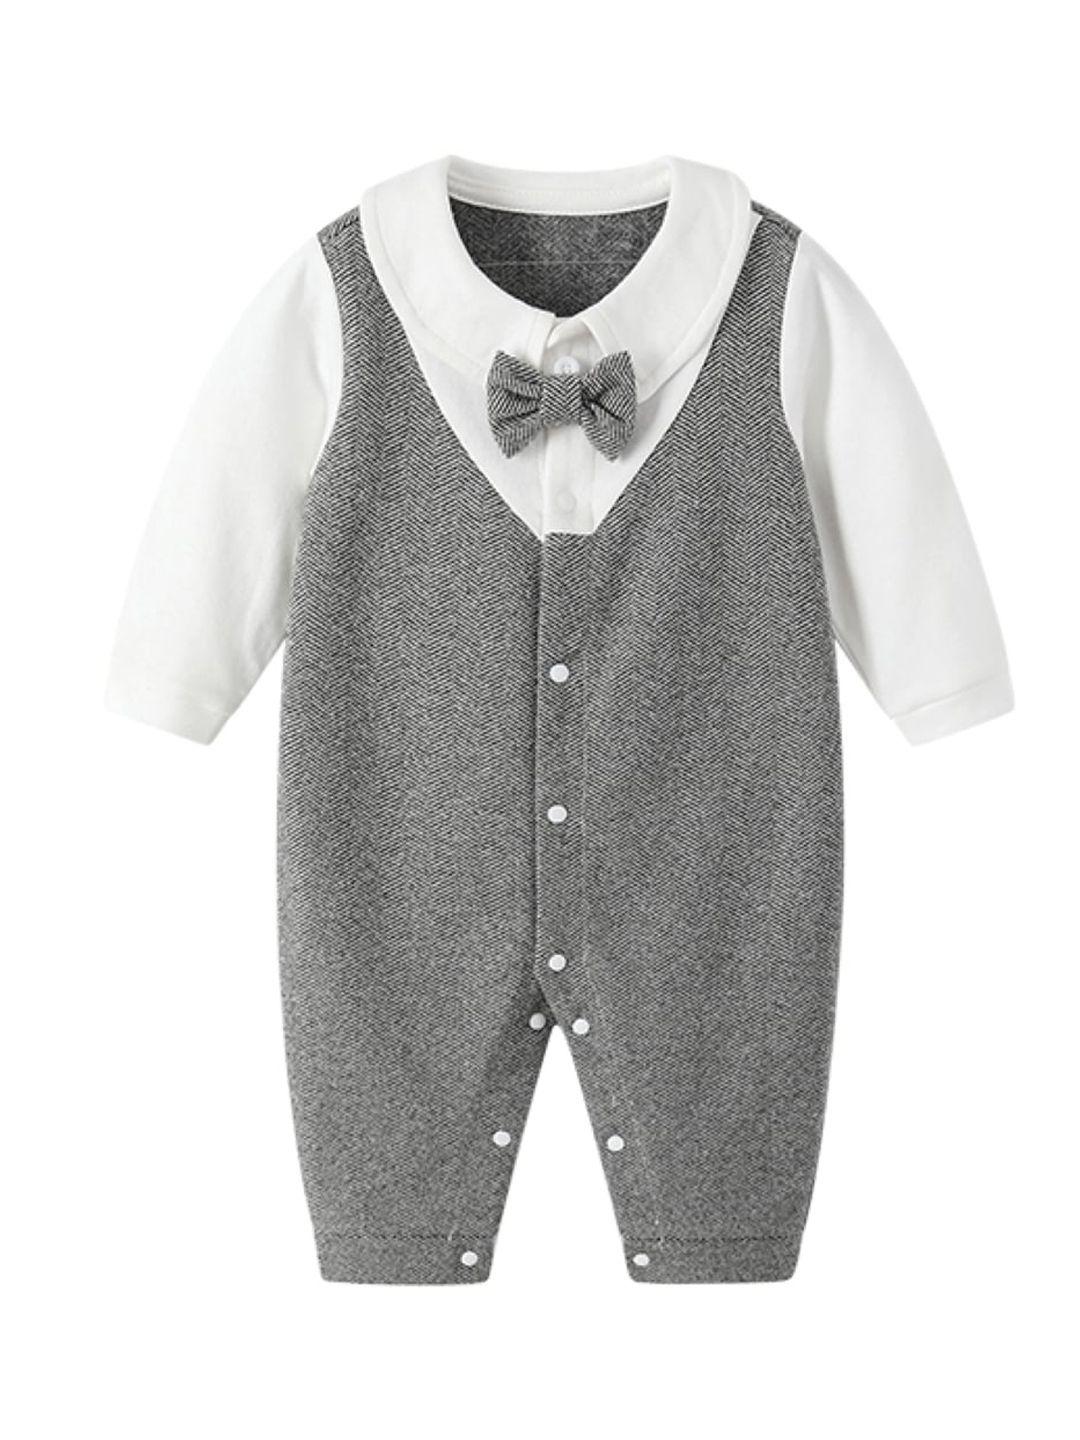 stylecast infants grey shirt collar romper